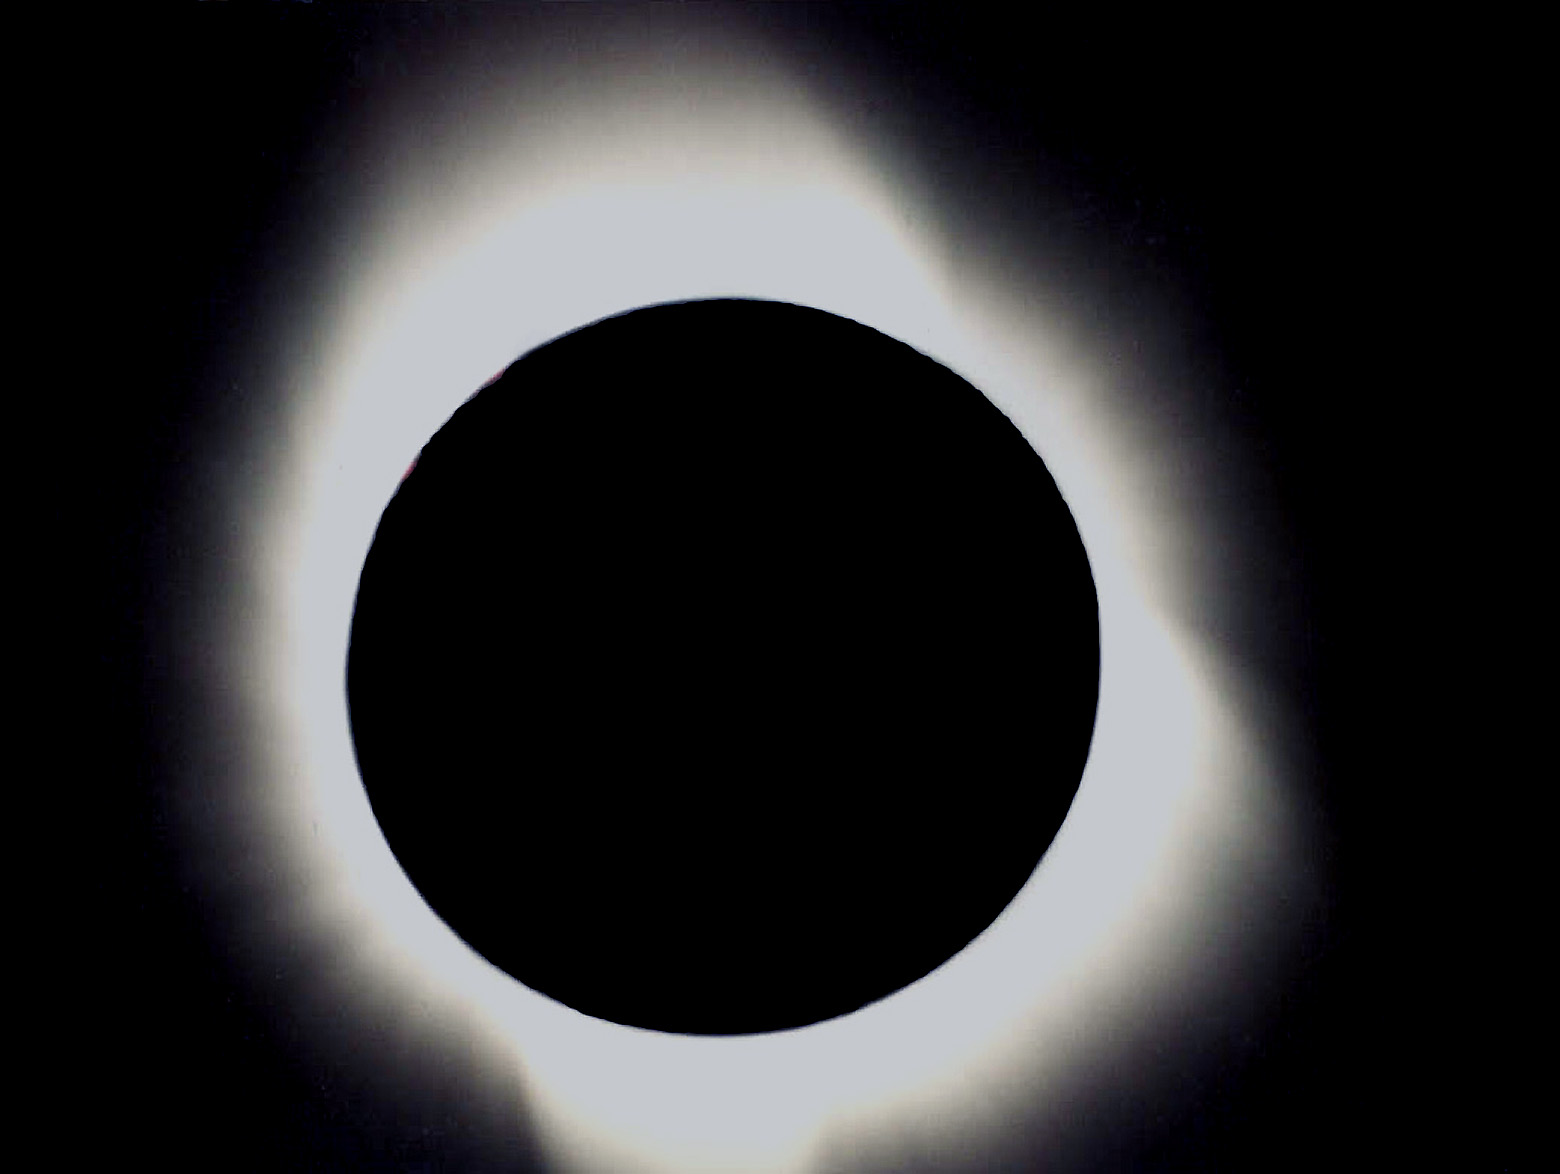 Eclipse 1994 - A56 - Full Corona - Long